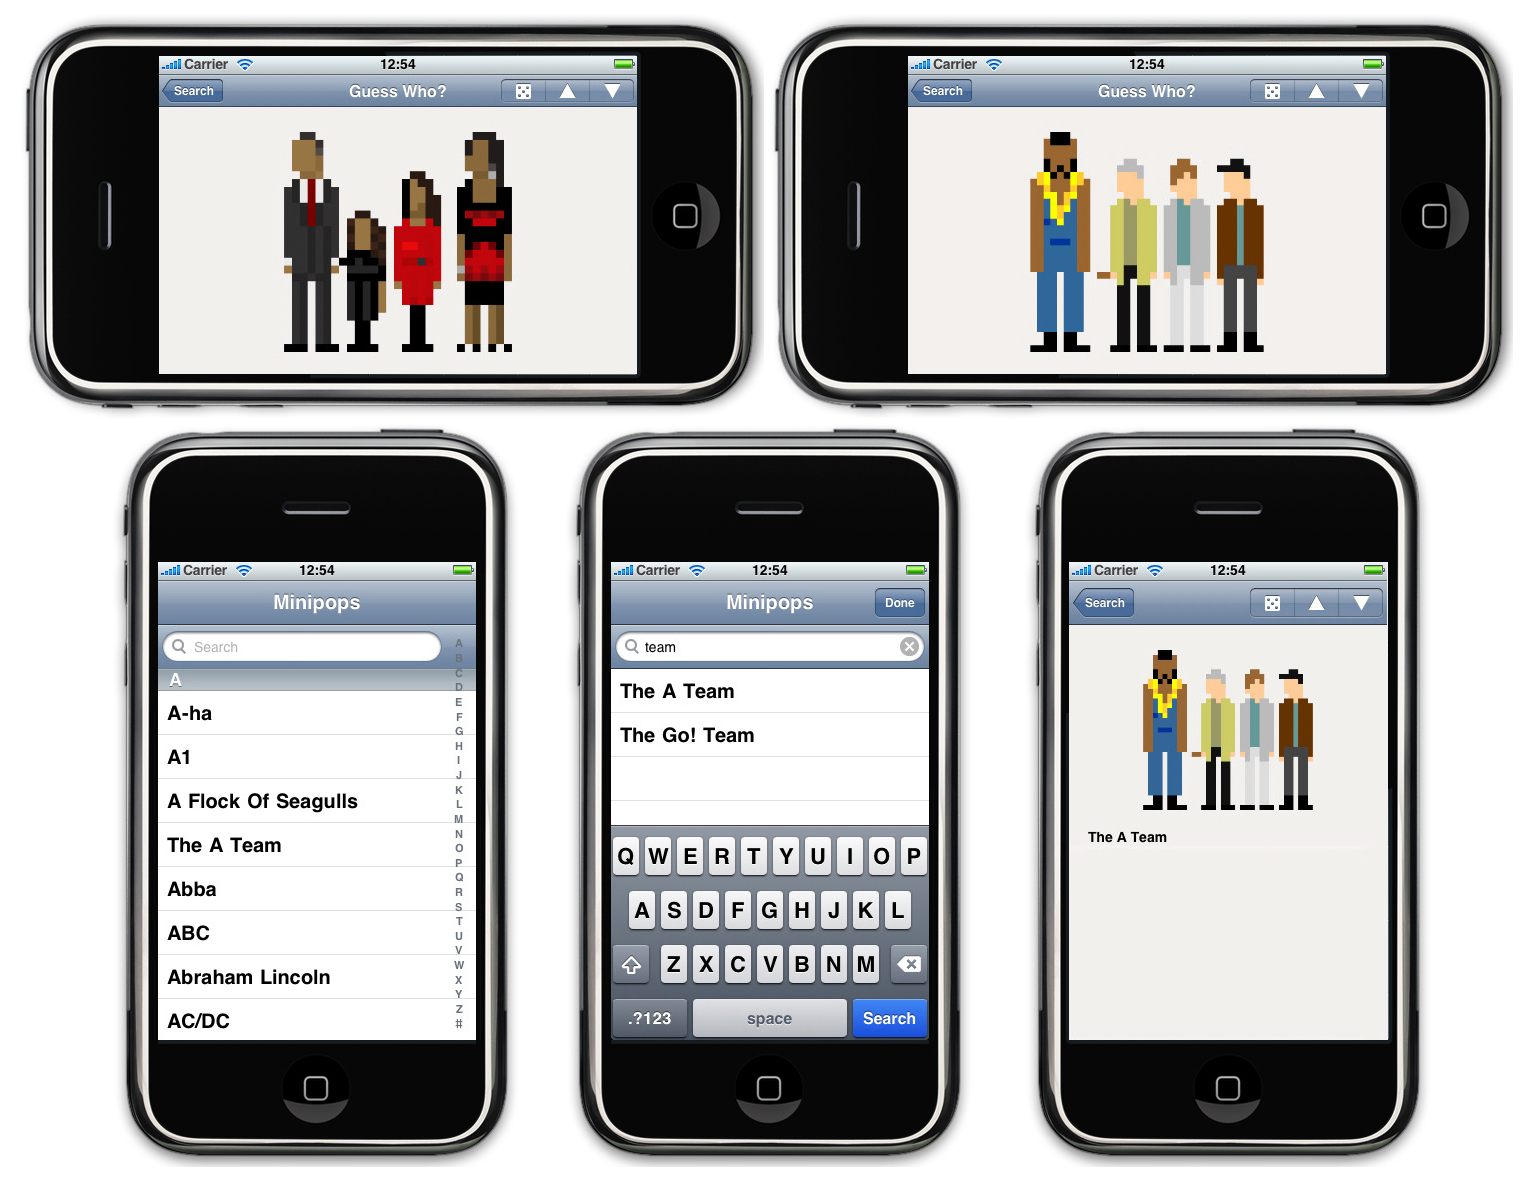 Craig Robinson's Minipops App Available On iTunes App Store